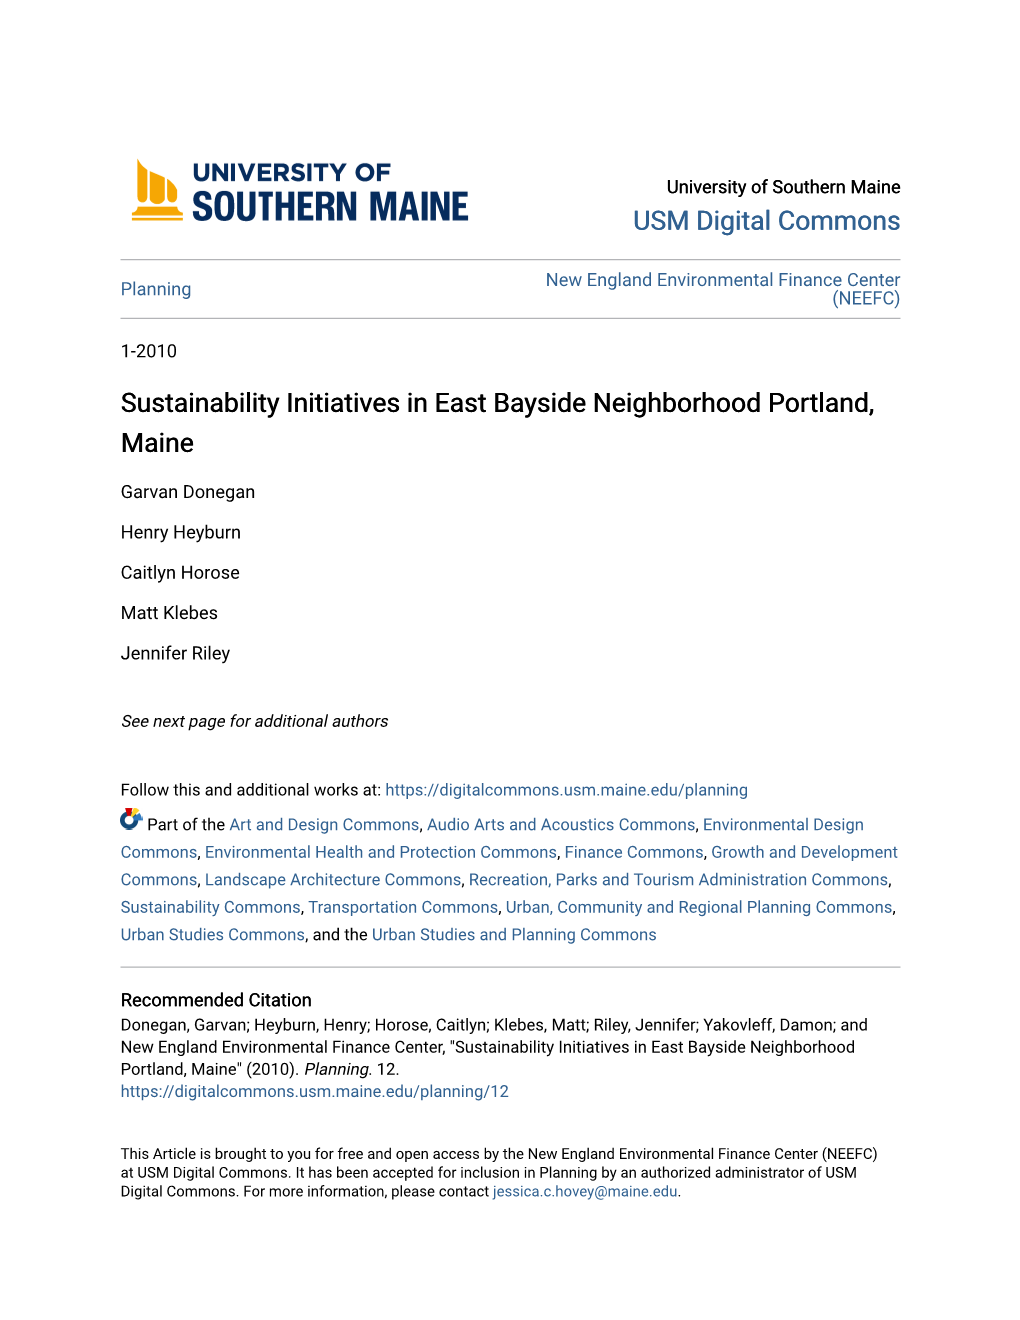 Sustainability Initiatives in East Bayside Neighborhood Portland, Maine